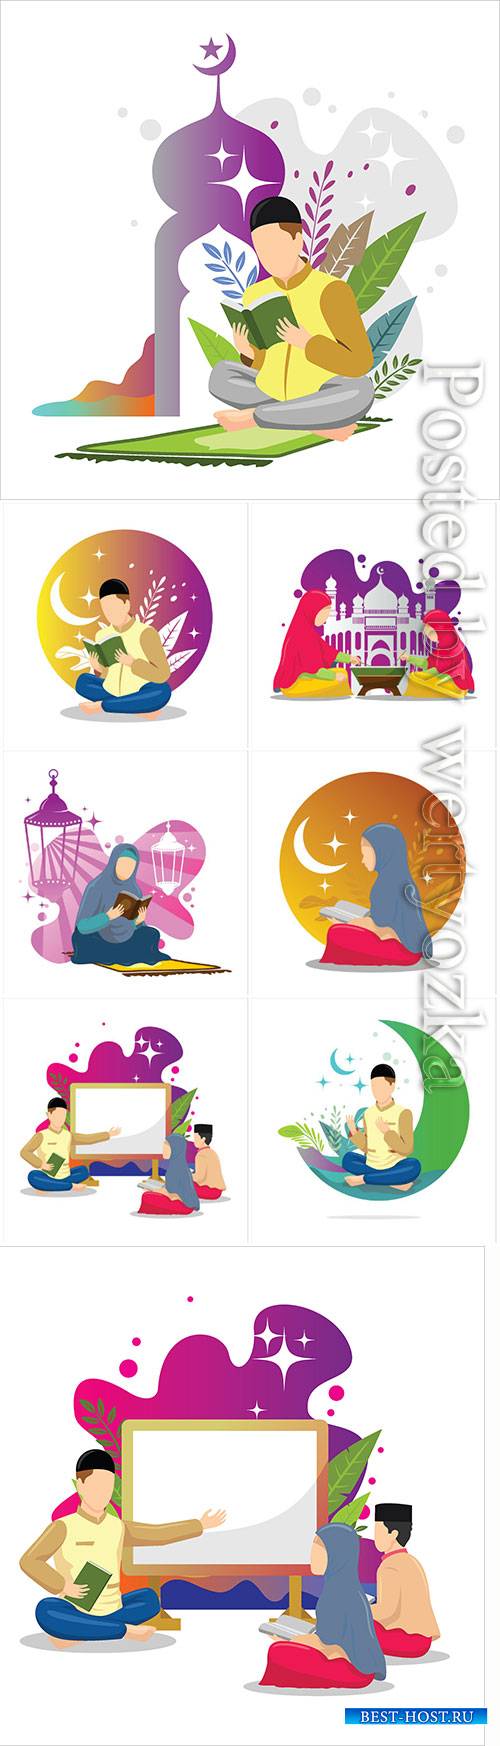 Eid mubarak vector illustration